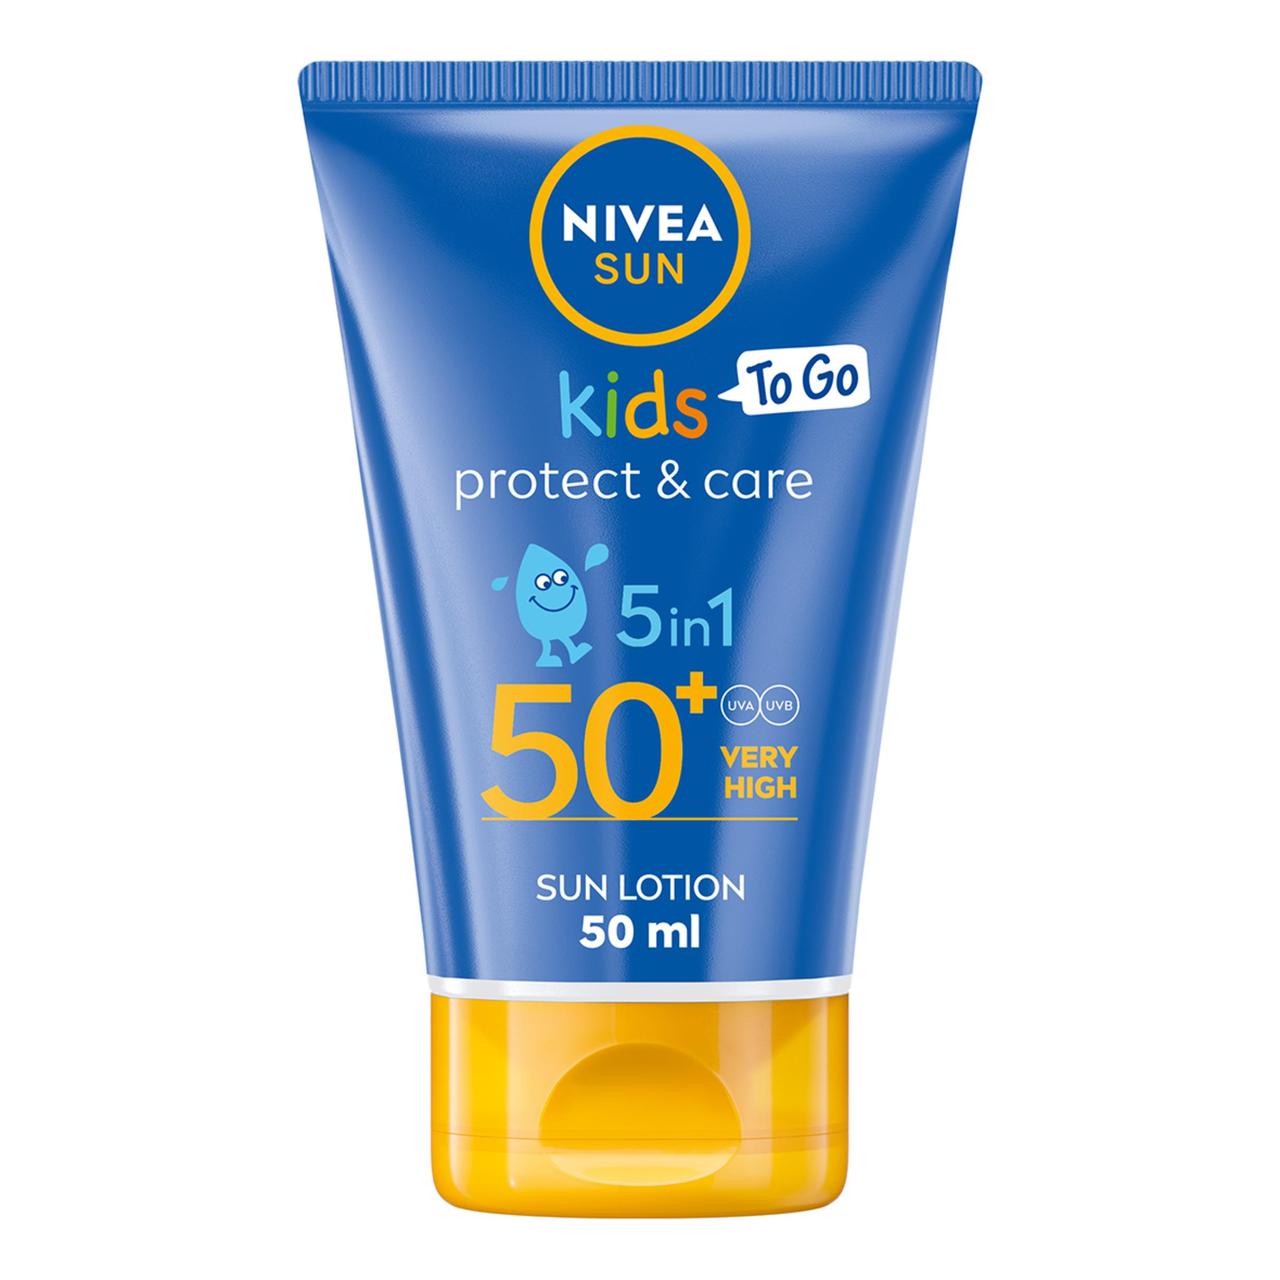 NIVEA SUN Kids Protect & Care Sun Cream To Go SPF50+ 50ml